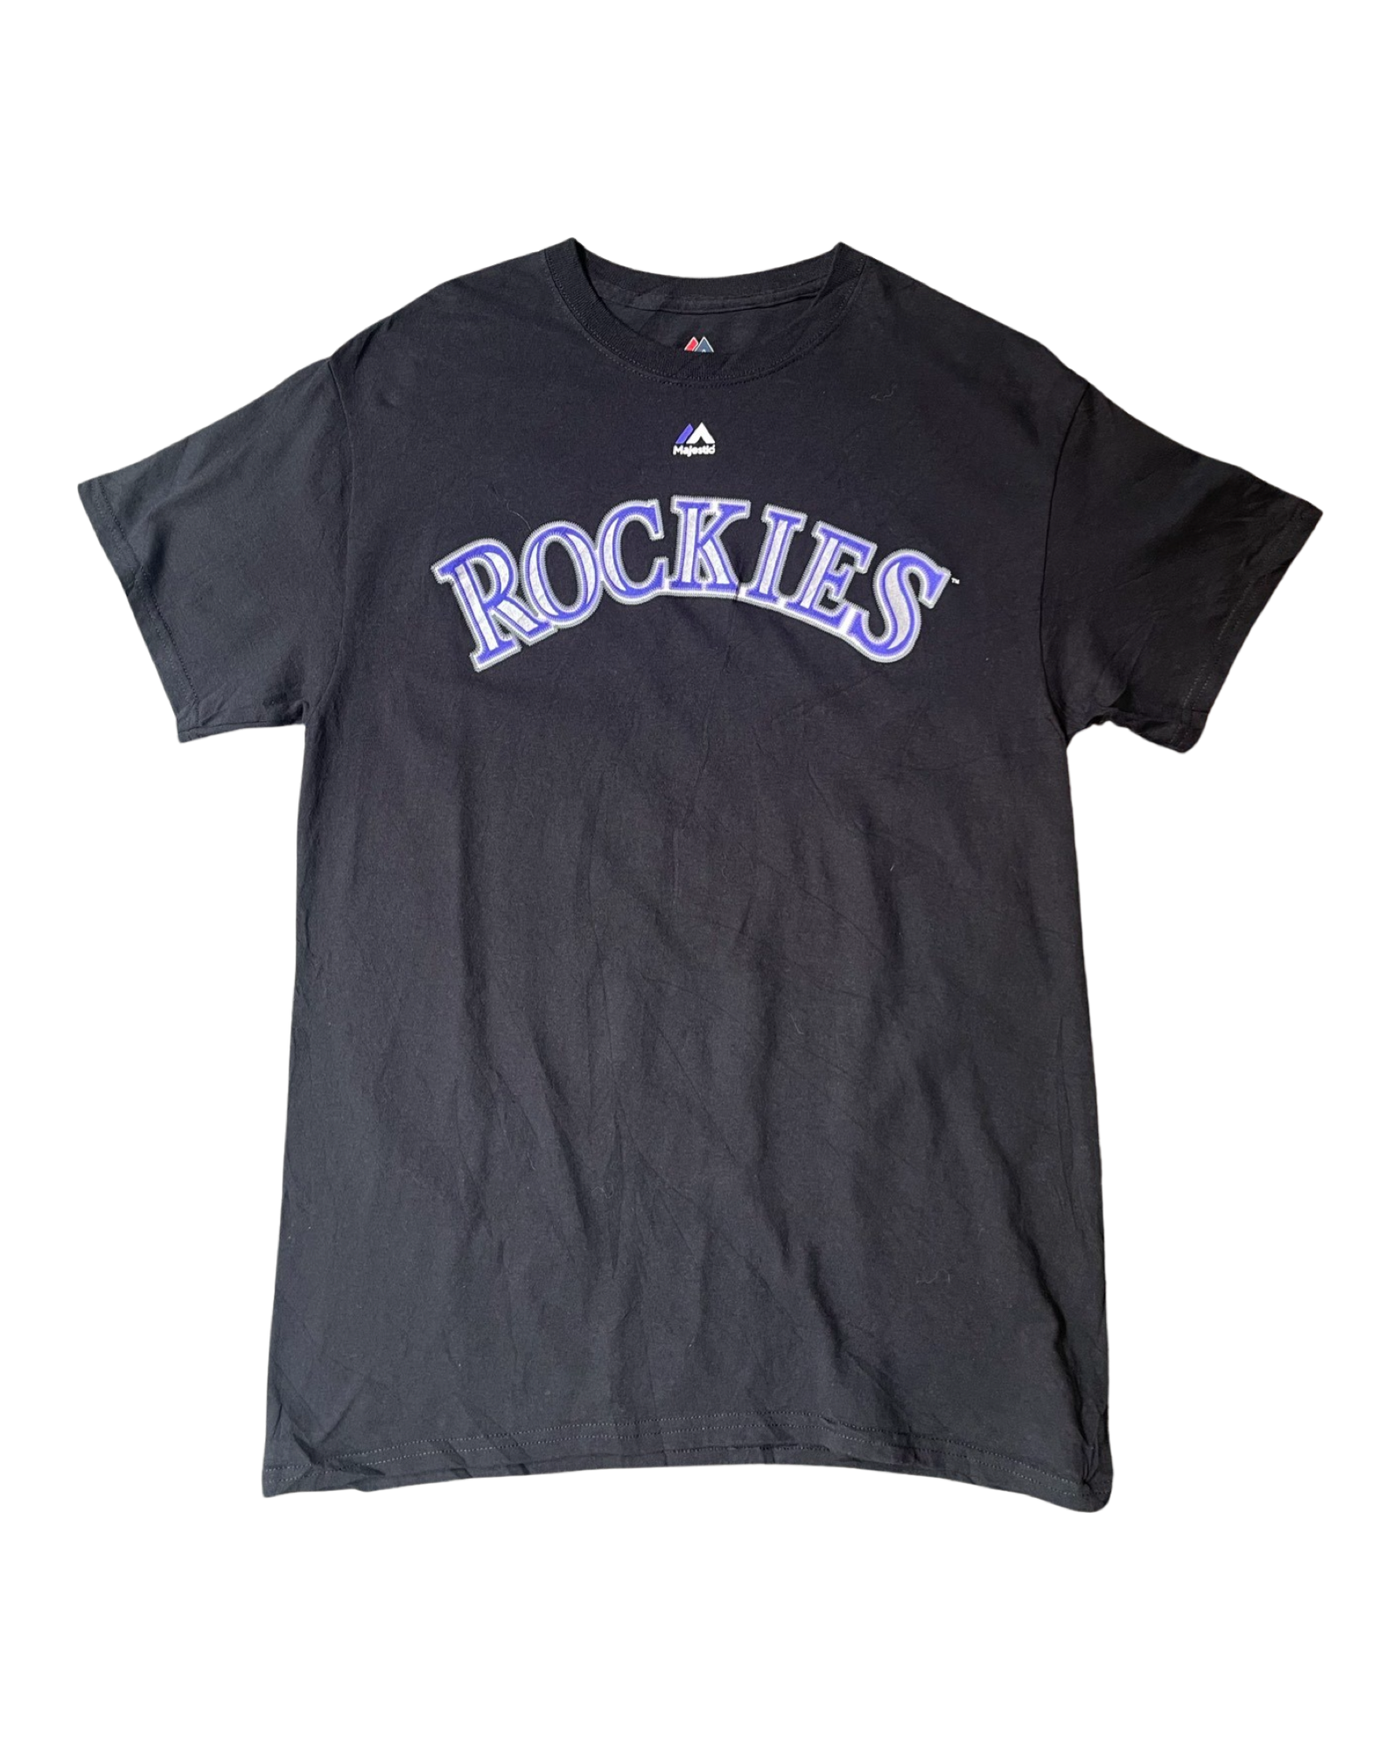 Vintage MBLRockies T-Shirt Size M